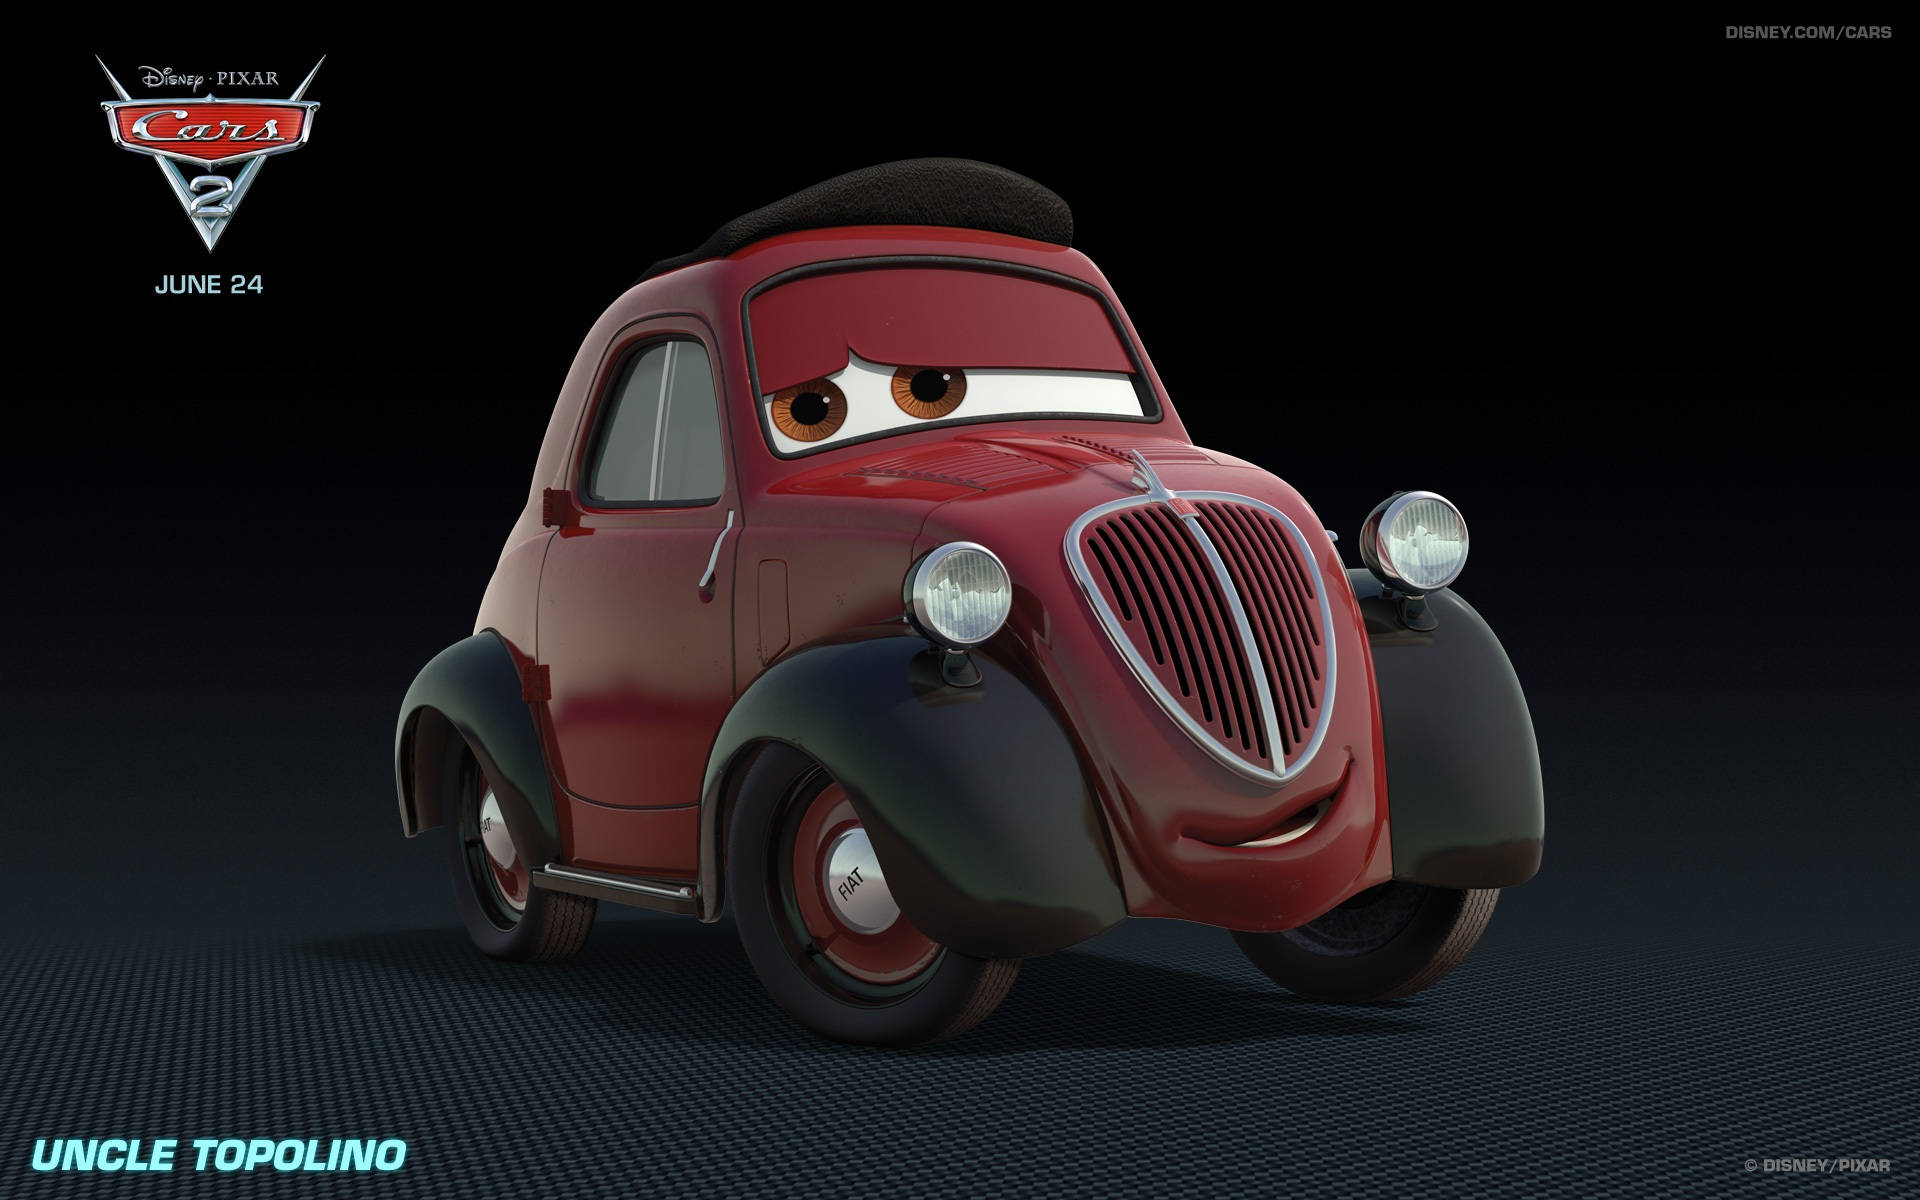 Disney Pixar Uncle Topolino Cars 2 Wallpaper